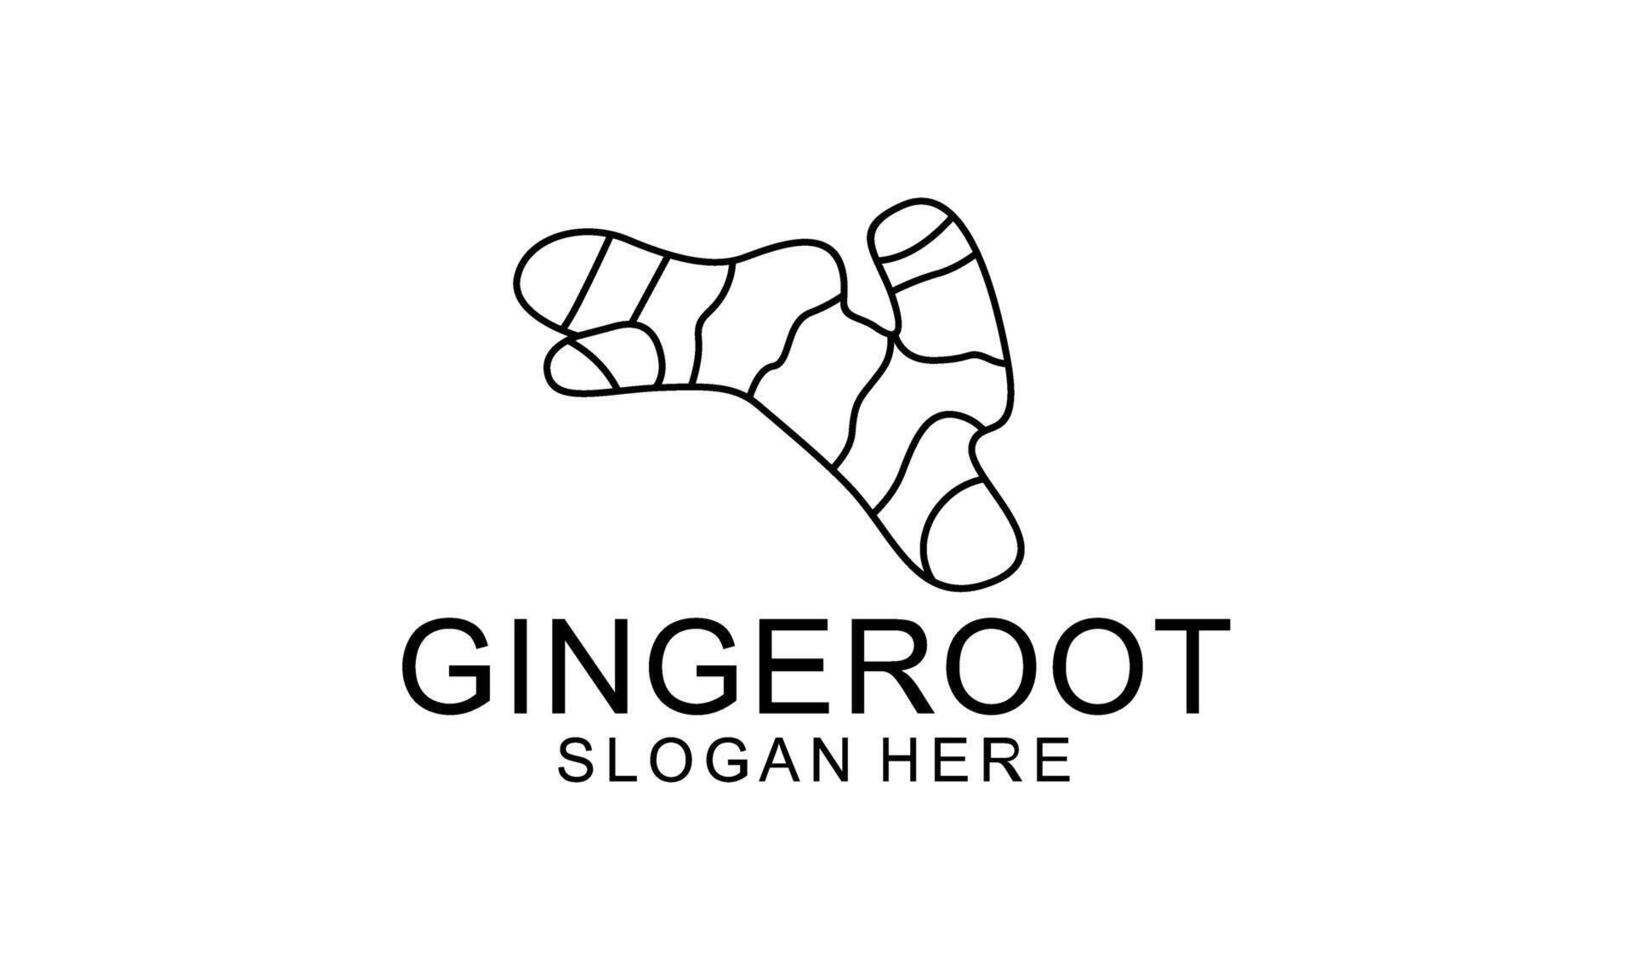 Ginger root logo. Round linear logo of ginger vector